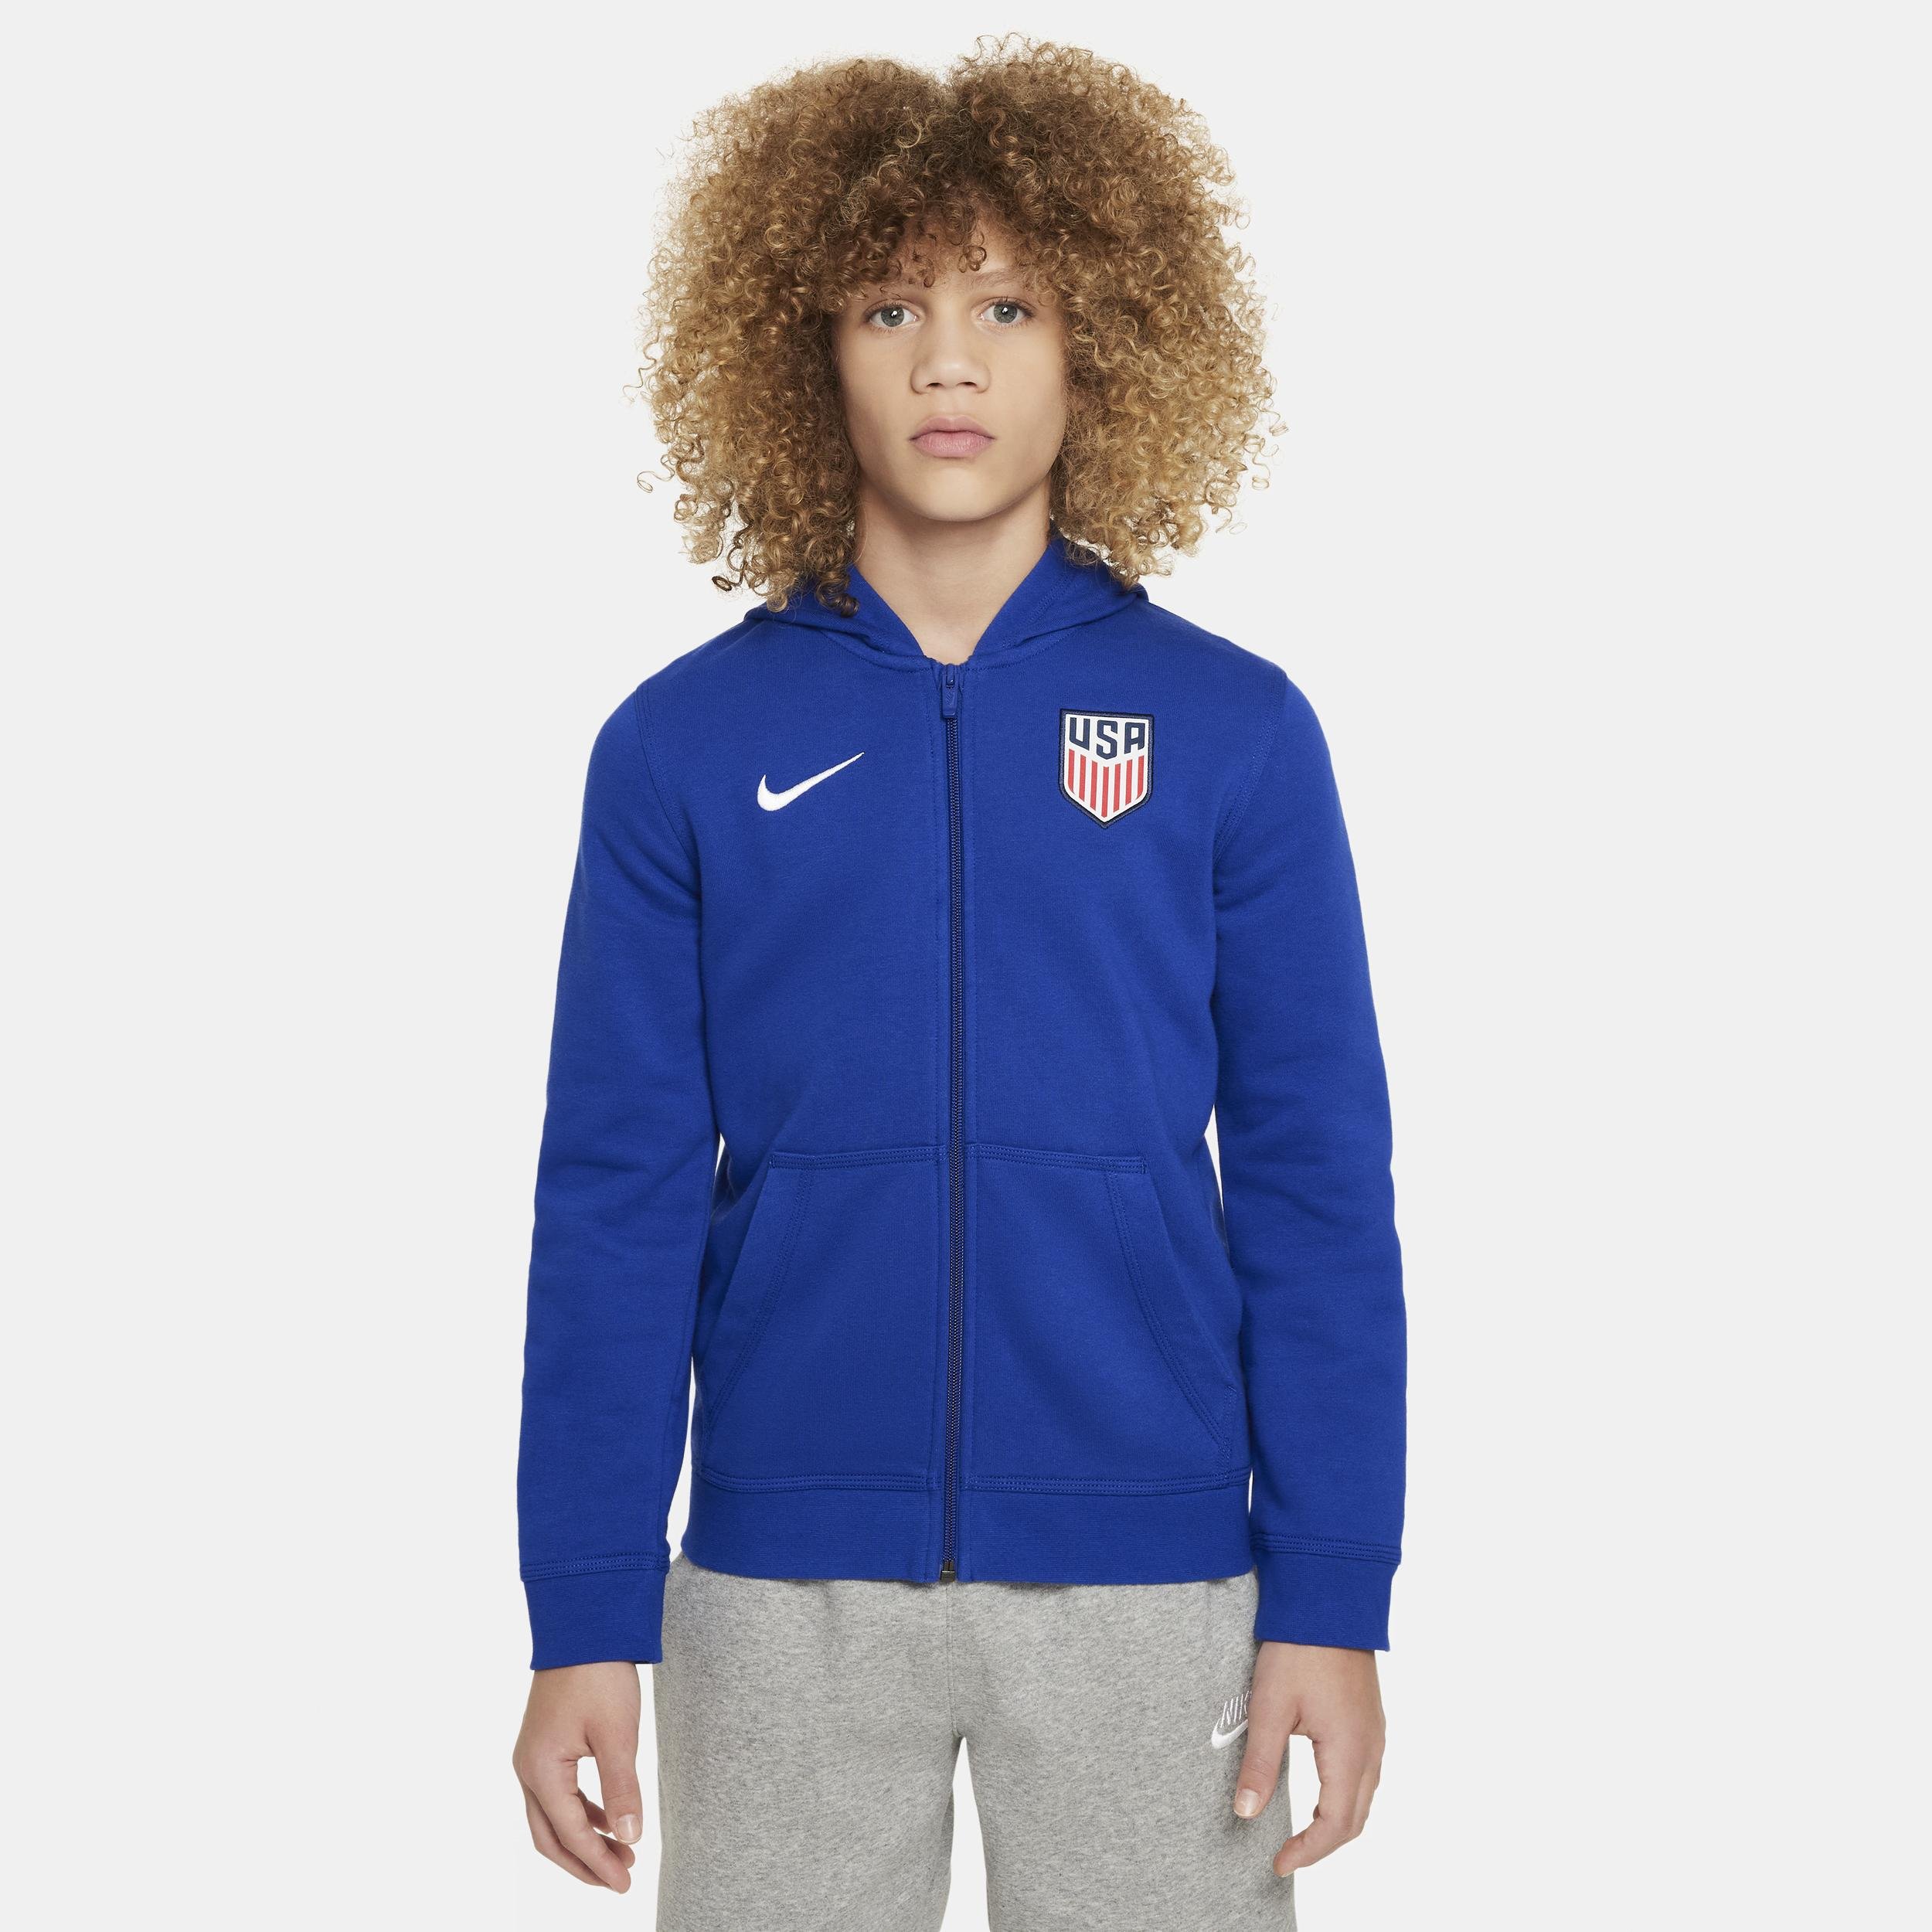 USMNT Club Big Kids' (Boys') Nike Soccer Full-Zip French Terry Hoodie by NIKE